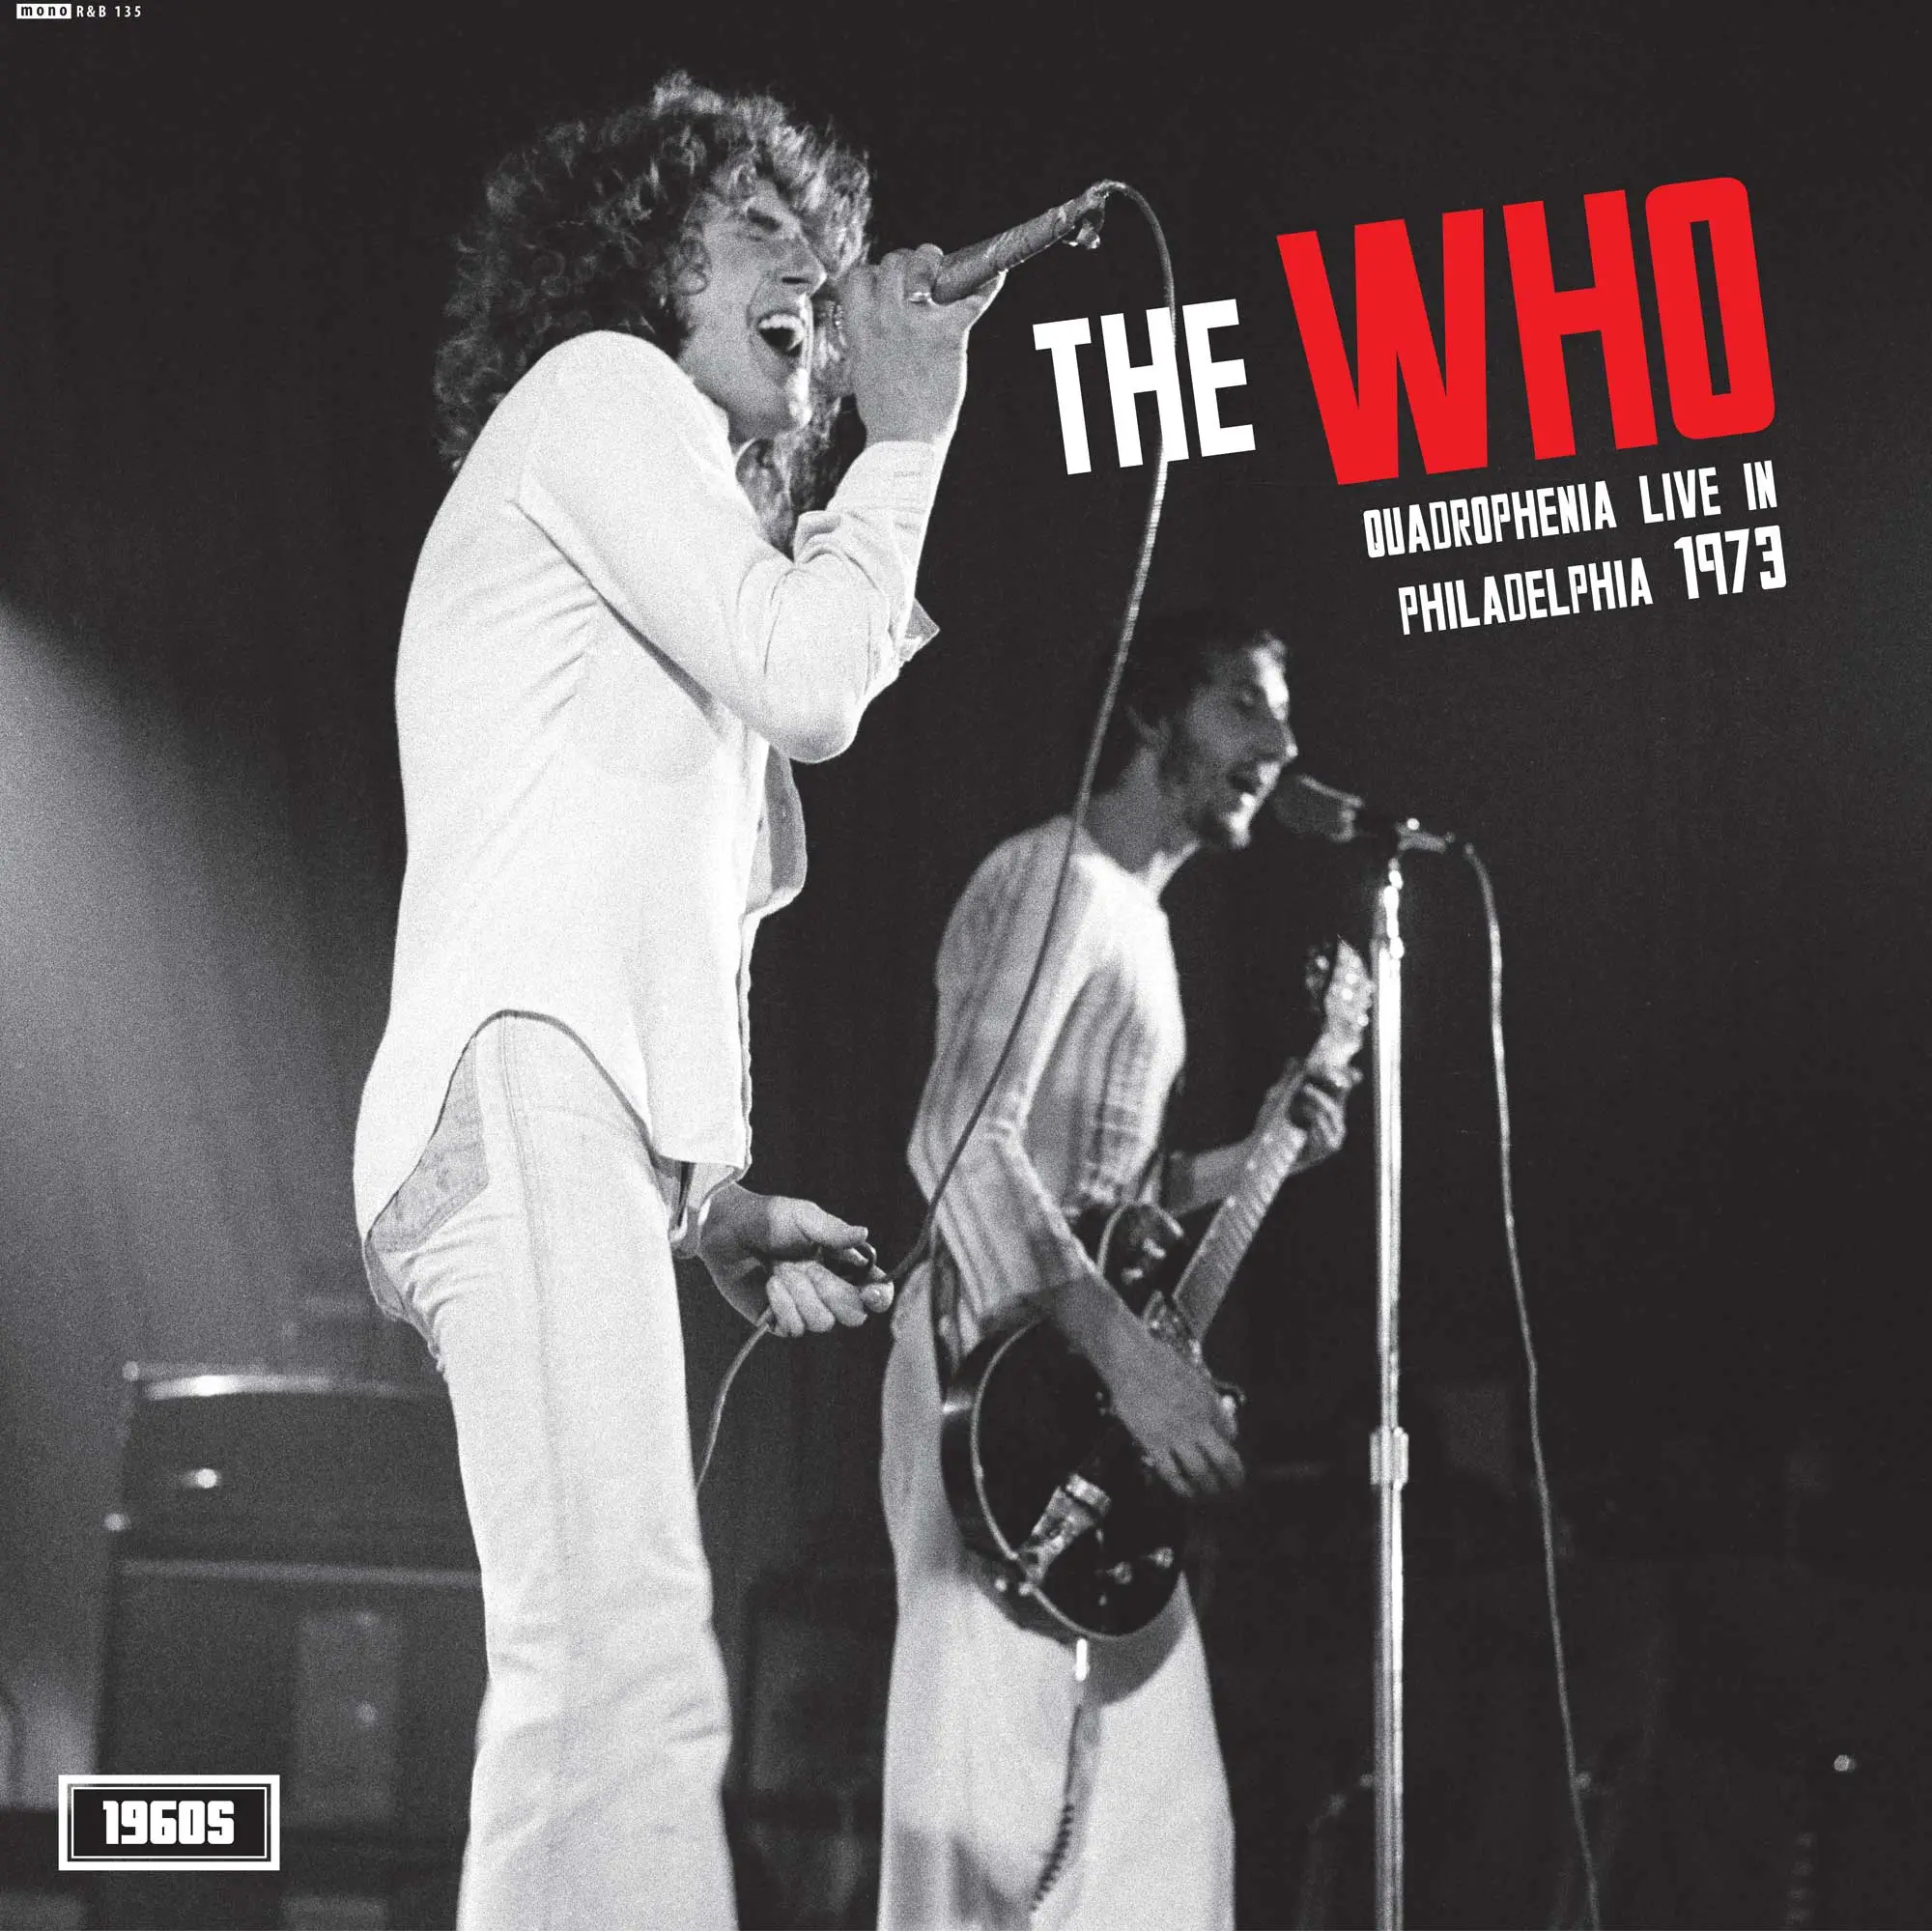 <strong>The Who - Quadrophenia Live in Philadelphia 1973</strong> (Vinyl LP - black)